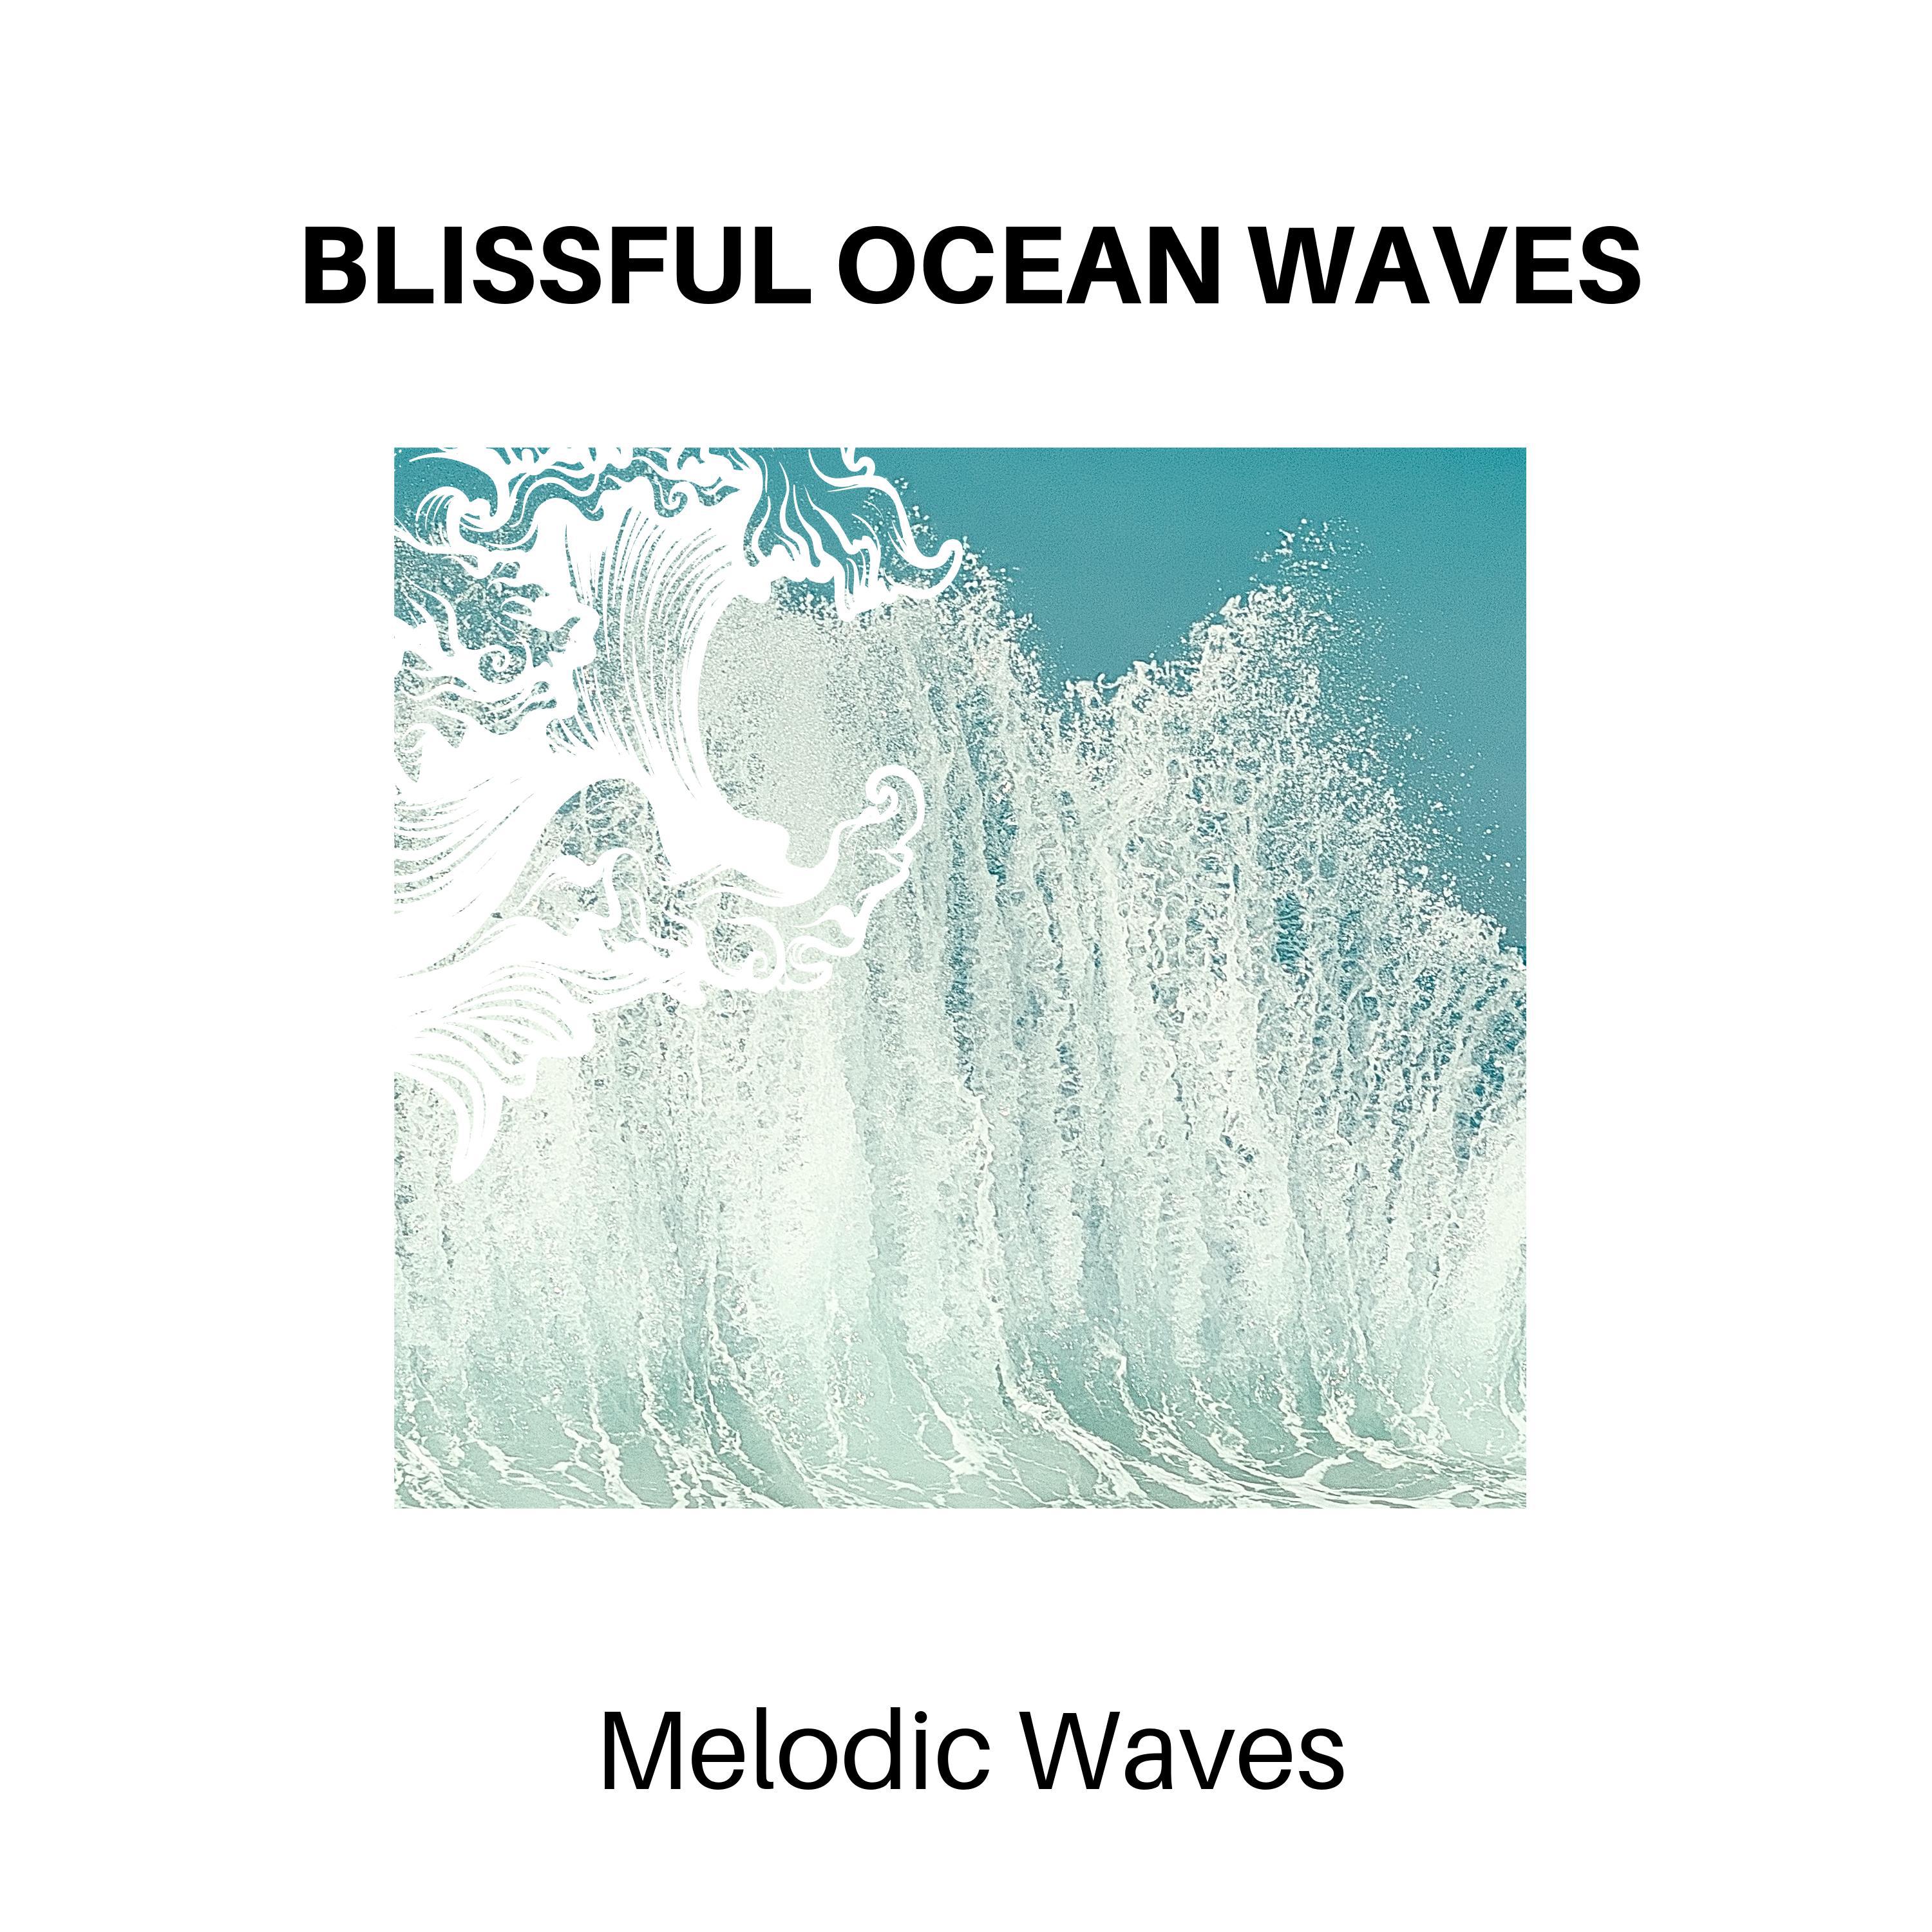 Calling Waves Music Project - Oceanic Bird Sound